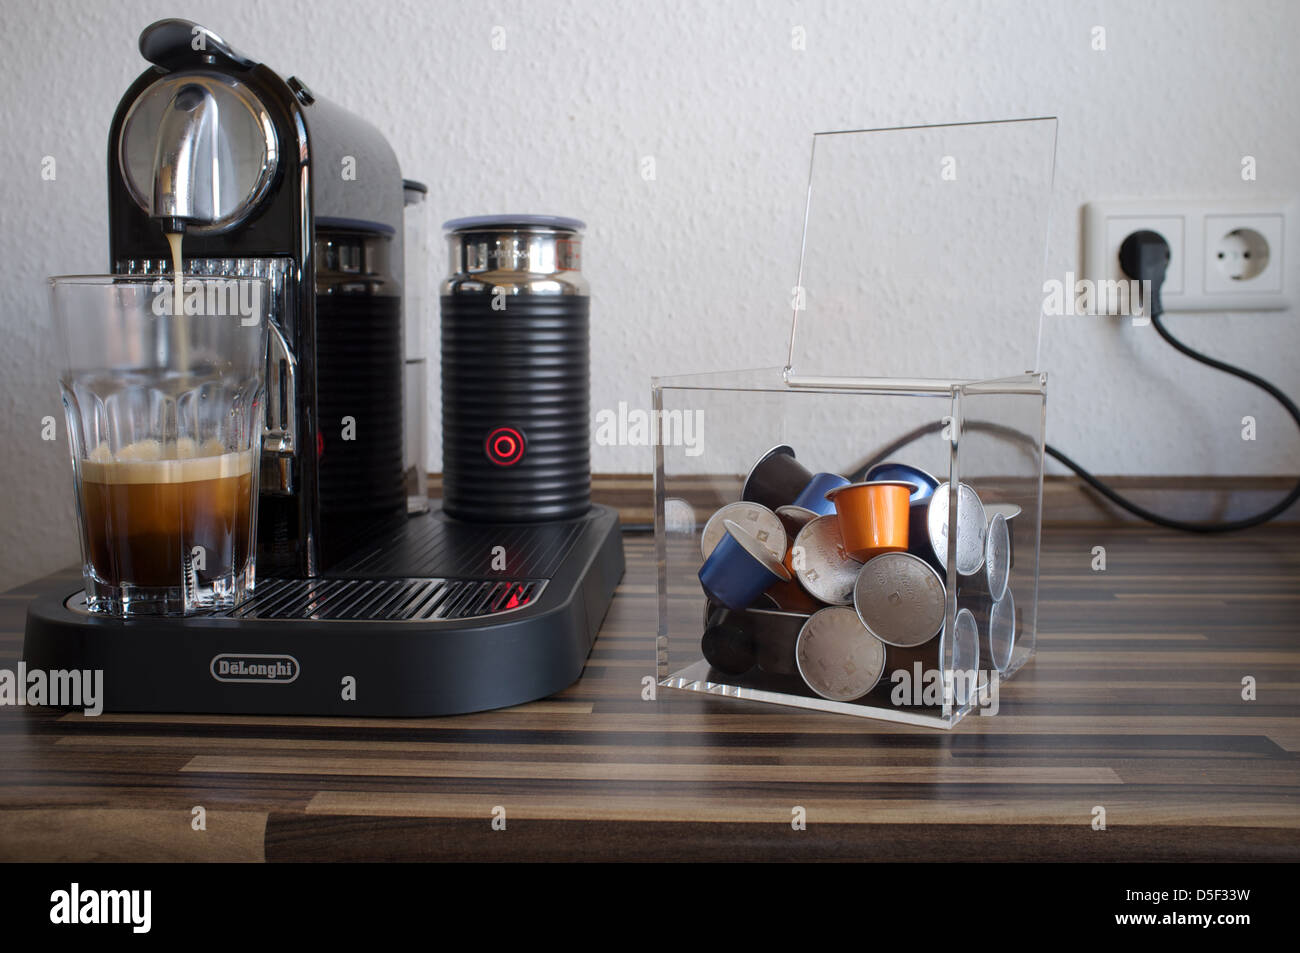 Nespresso DeLonghi coffee machine Stock Photo - Alamy